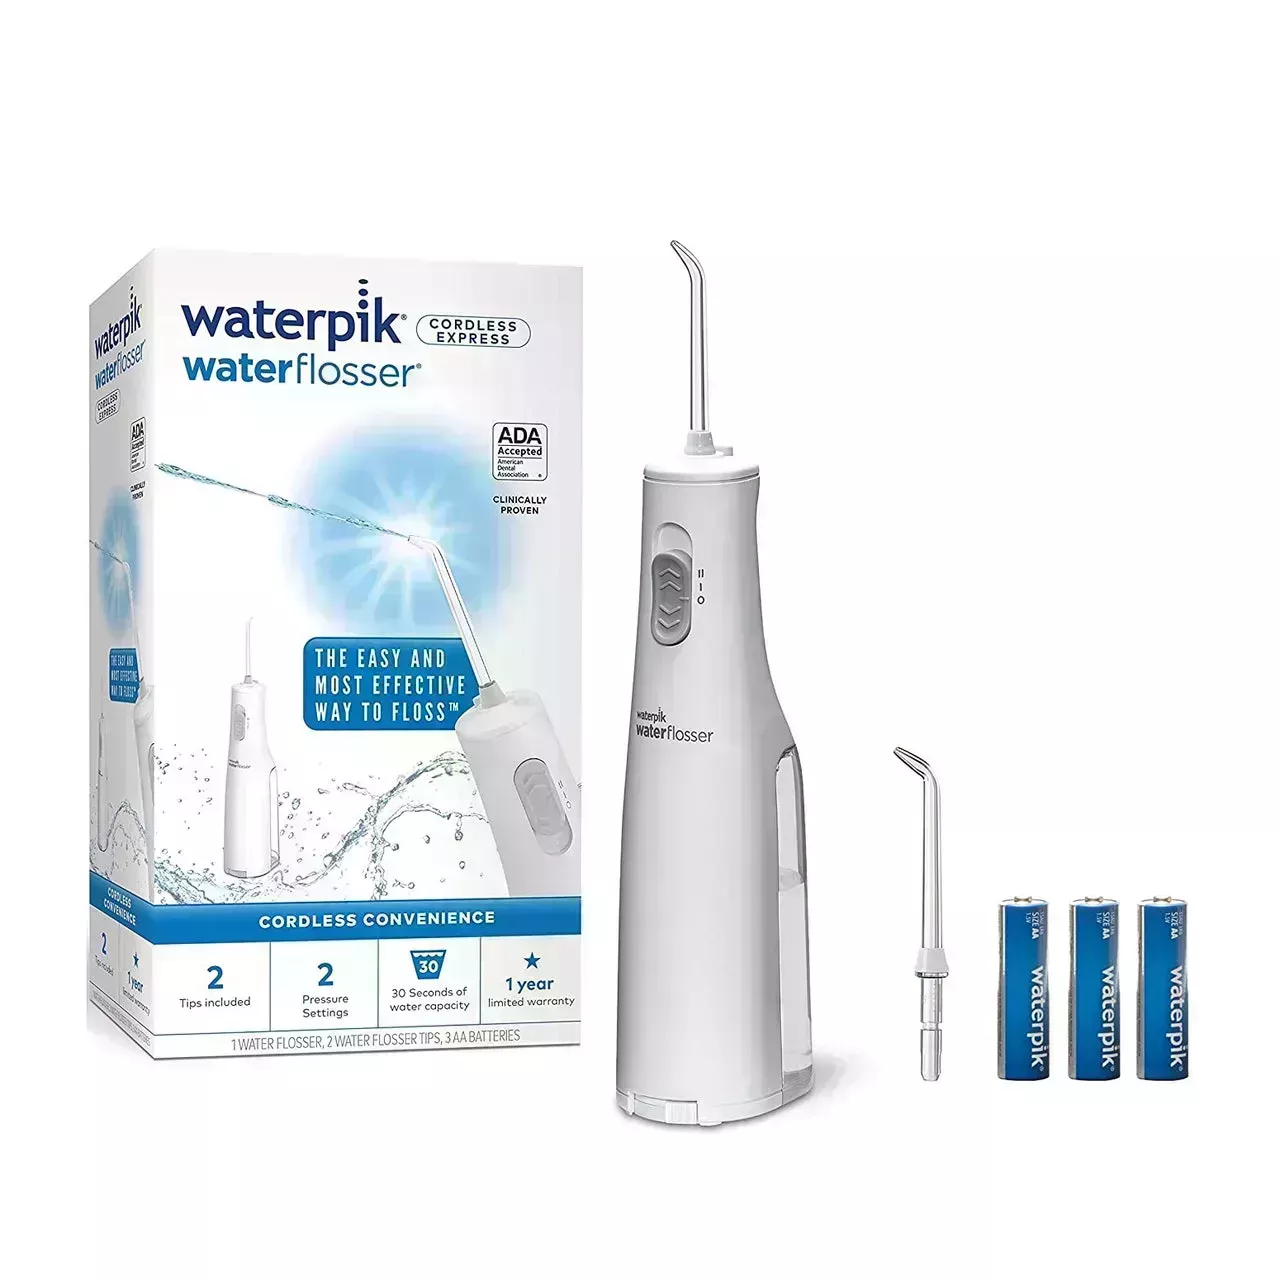 Waterpik Cordless Water Flosser kit on white background